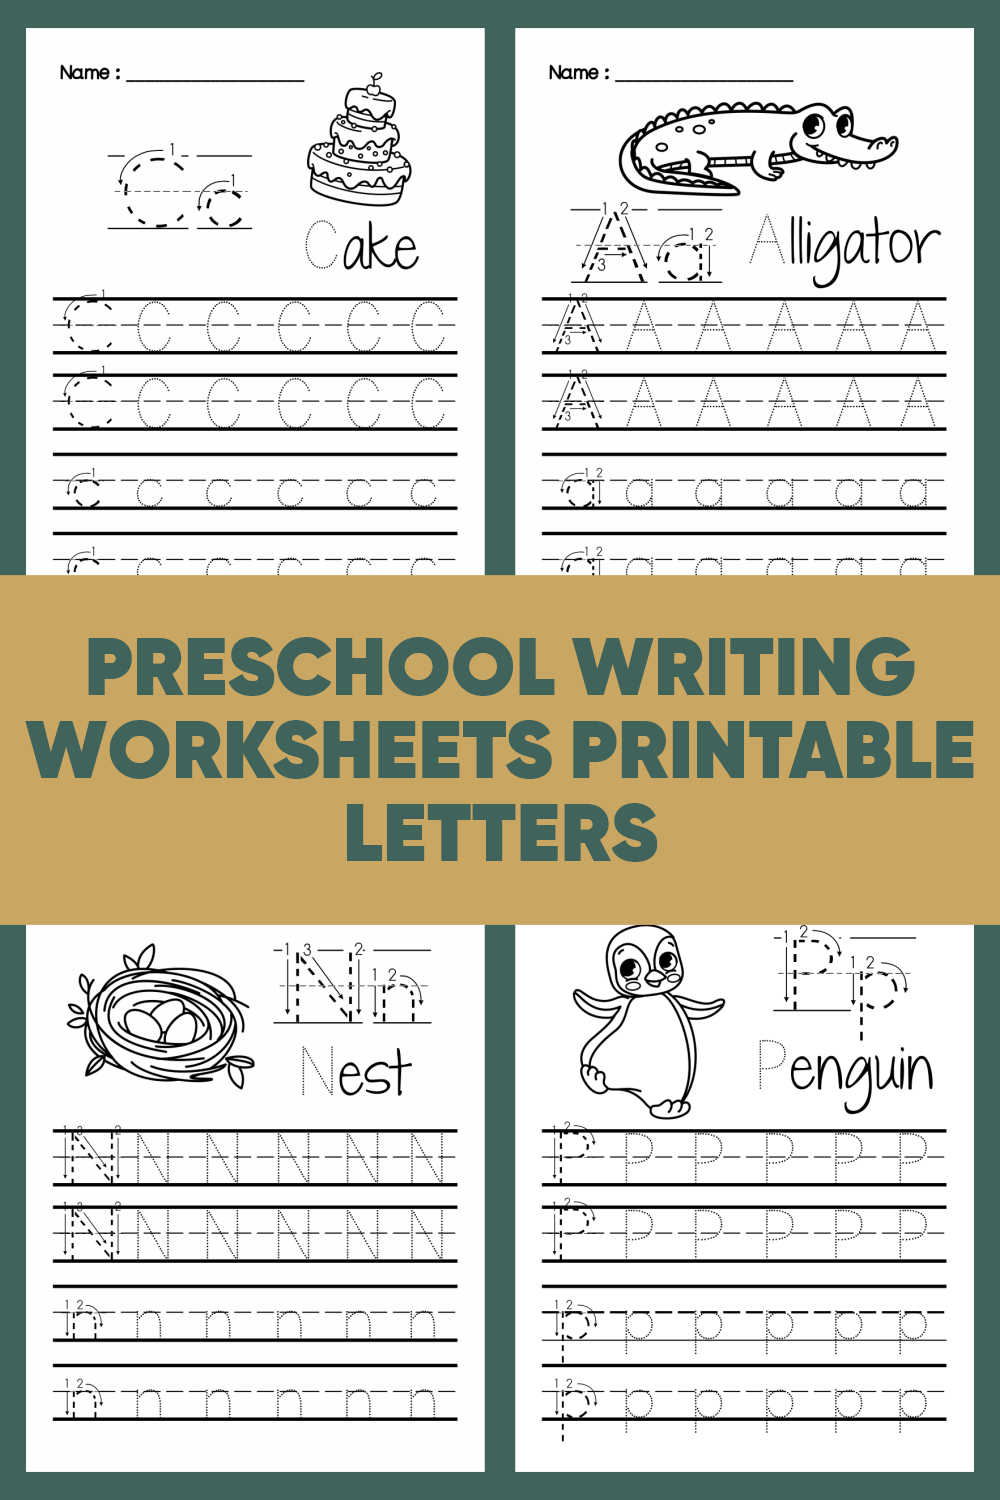 writing-worksheets-printable